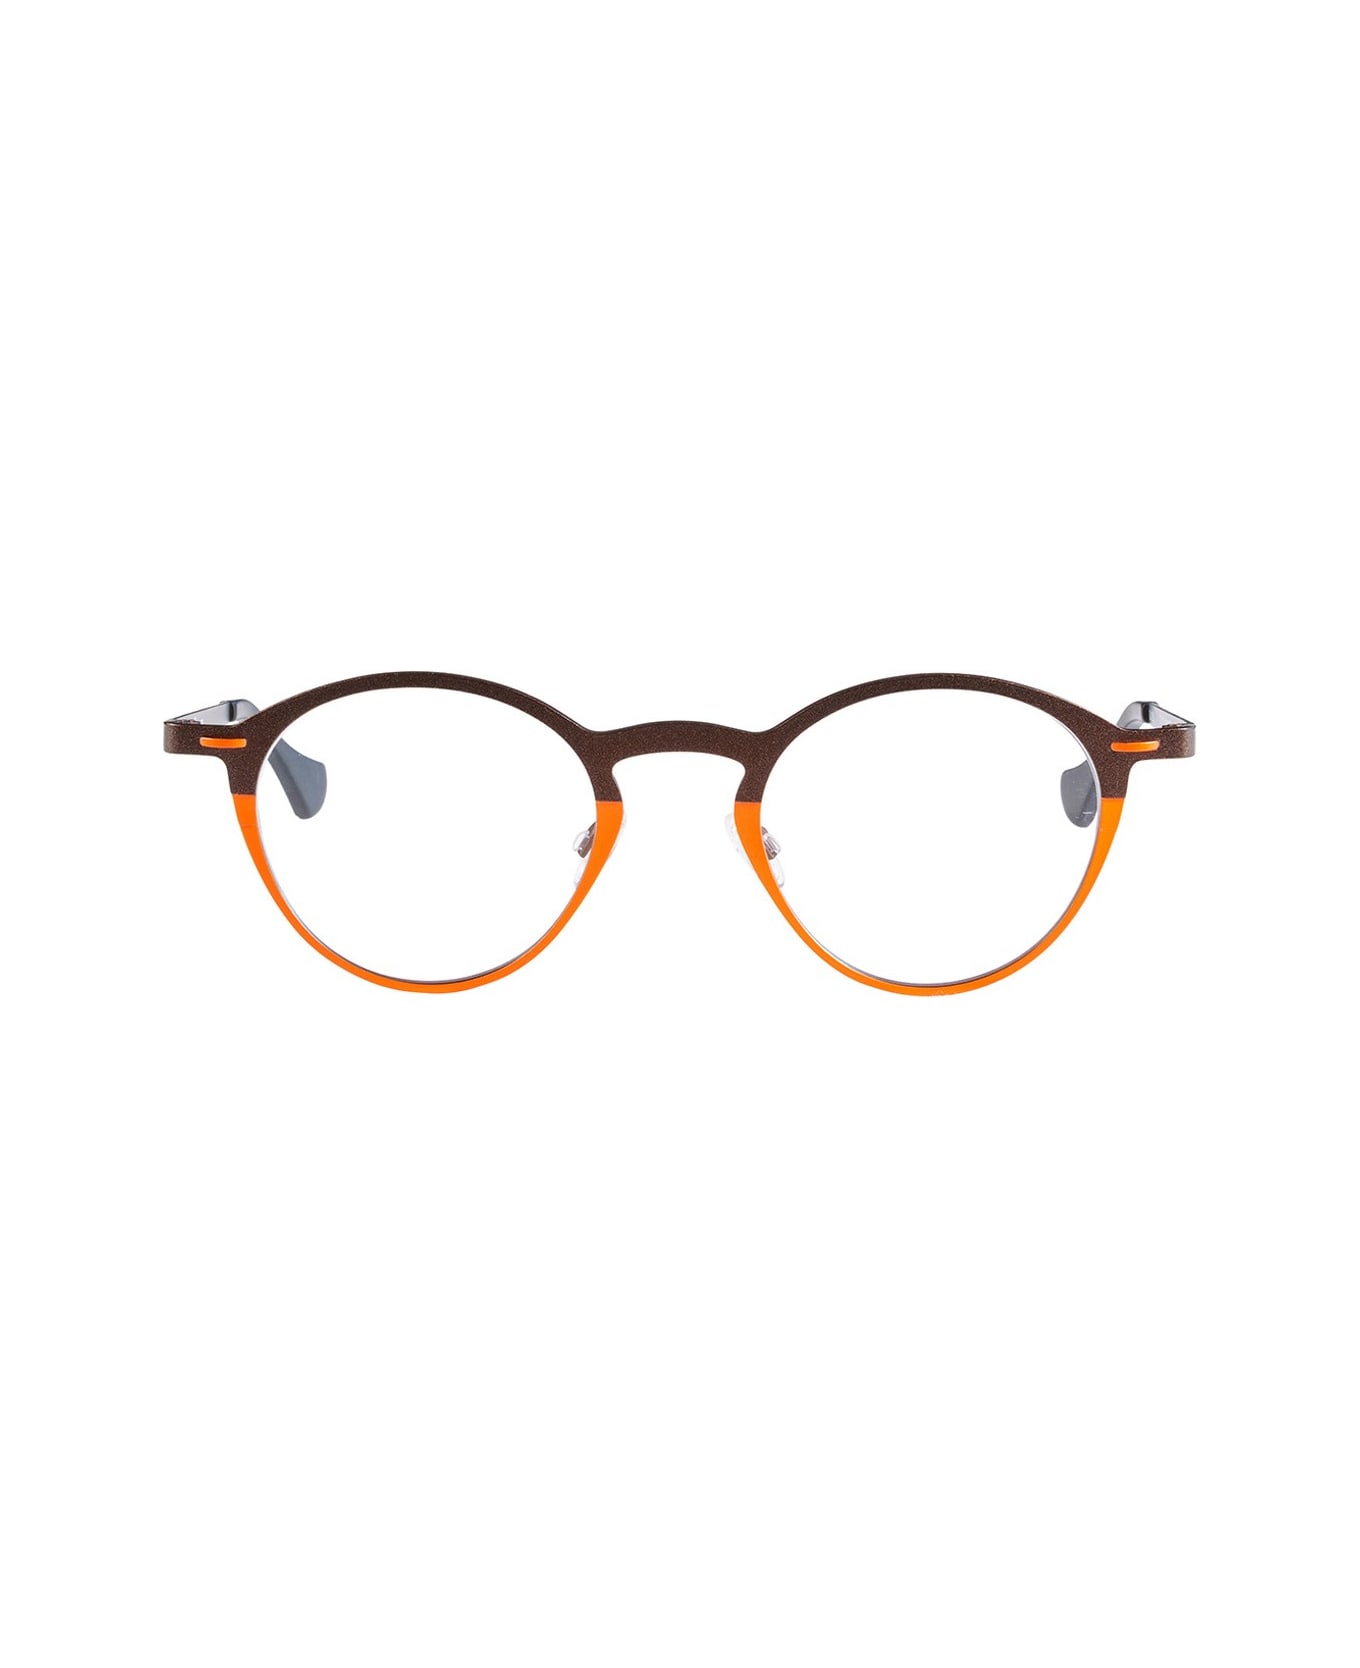 Matttew Mango Glasses - Arancione